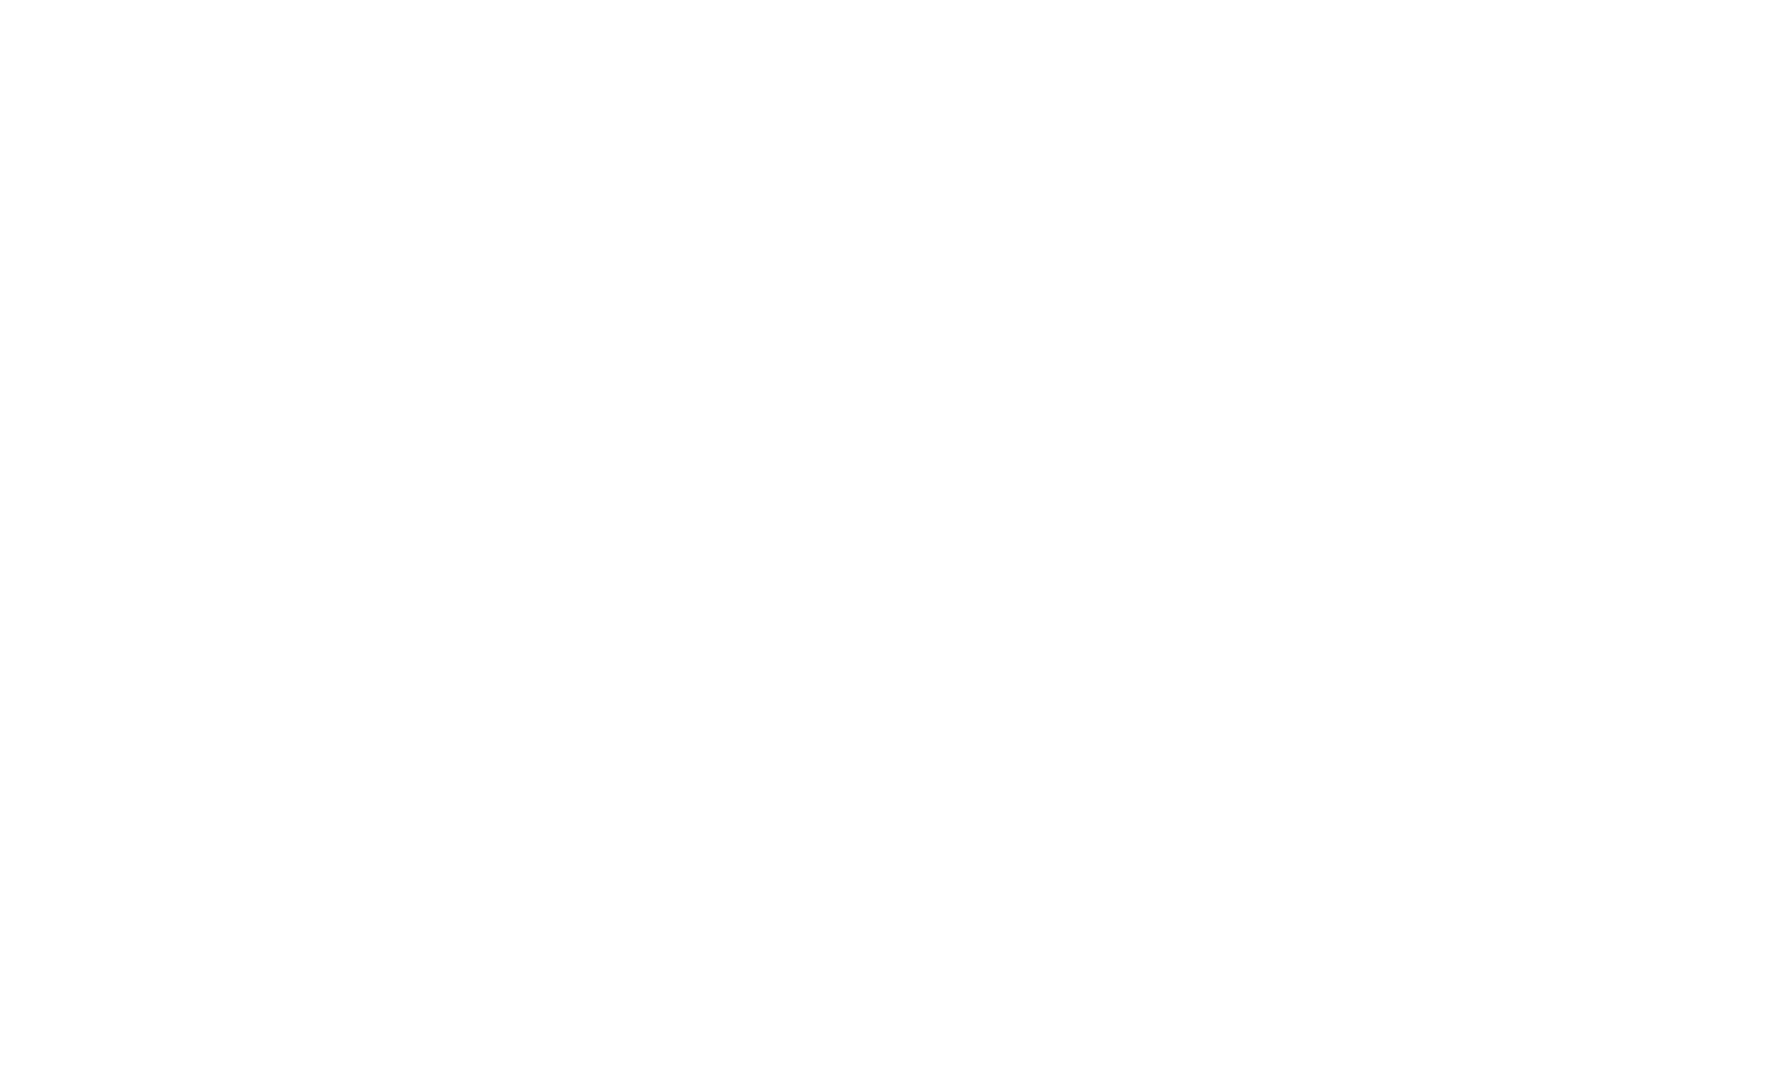 Park Plaza Veredula